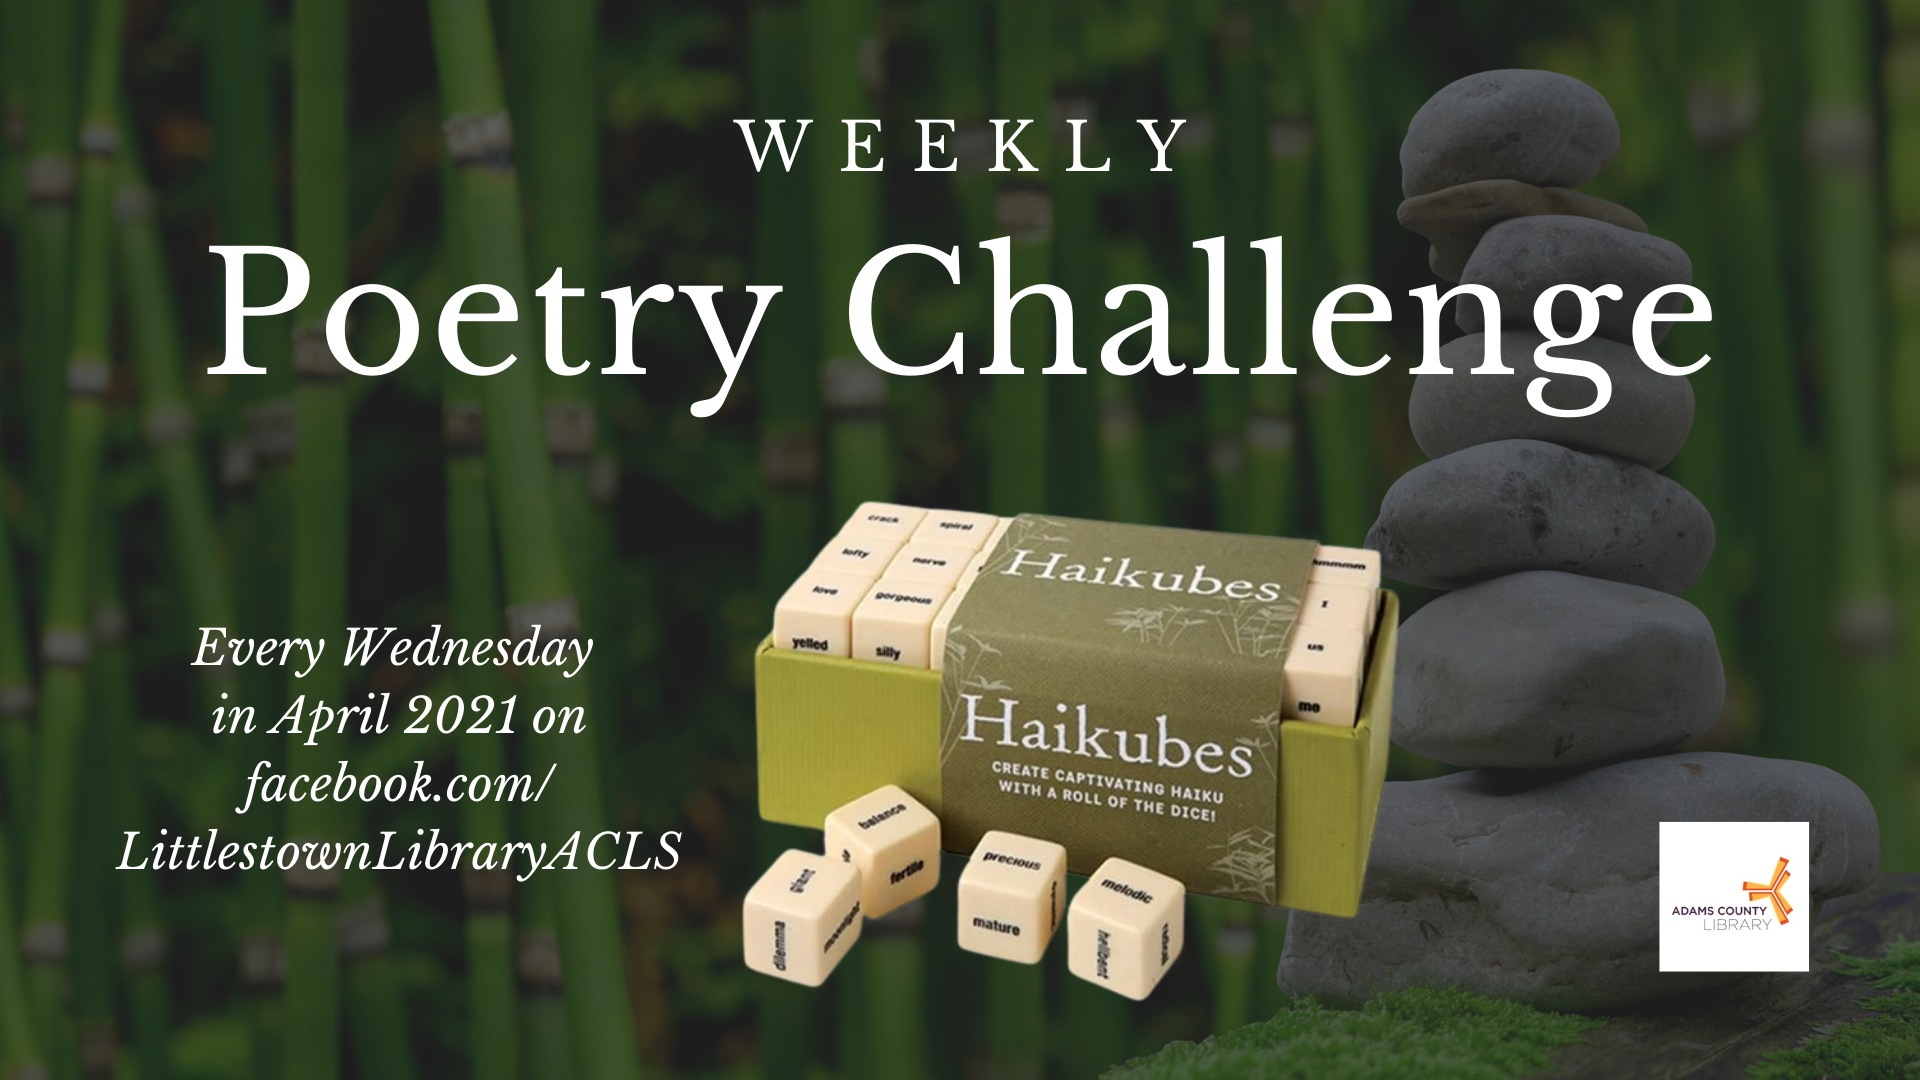 Weekly Poetry Challenge with Haikubes every Wednesday in April 2021 on facebook.com/LittlestownLibraryACLS